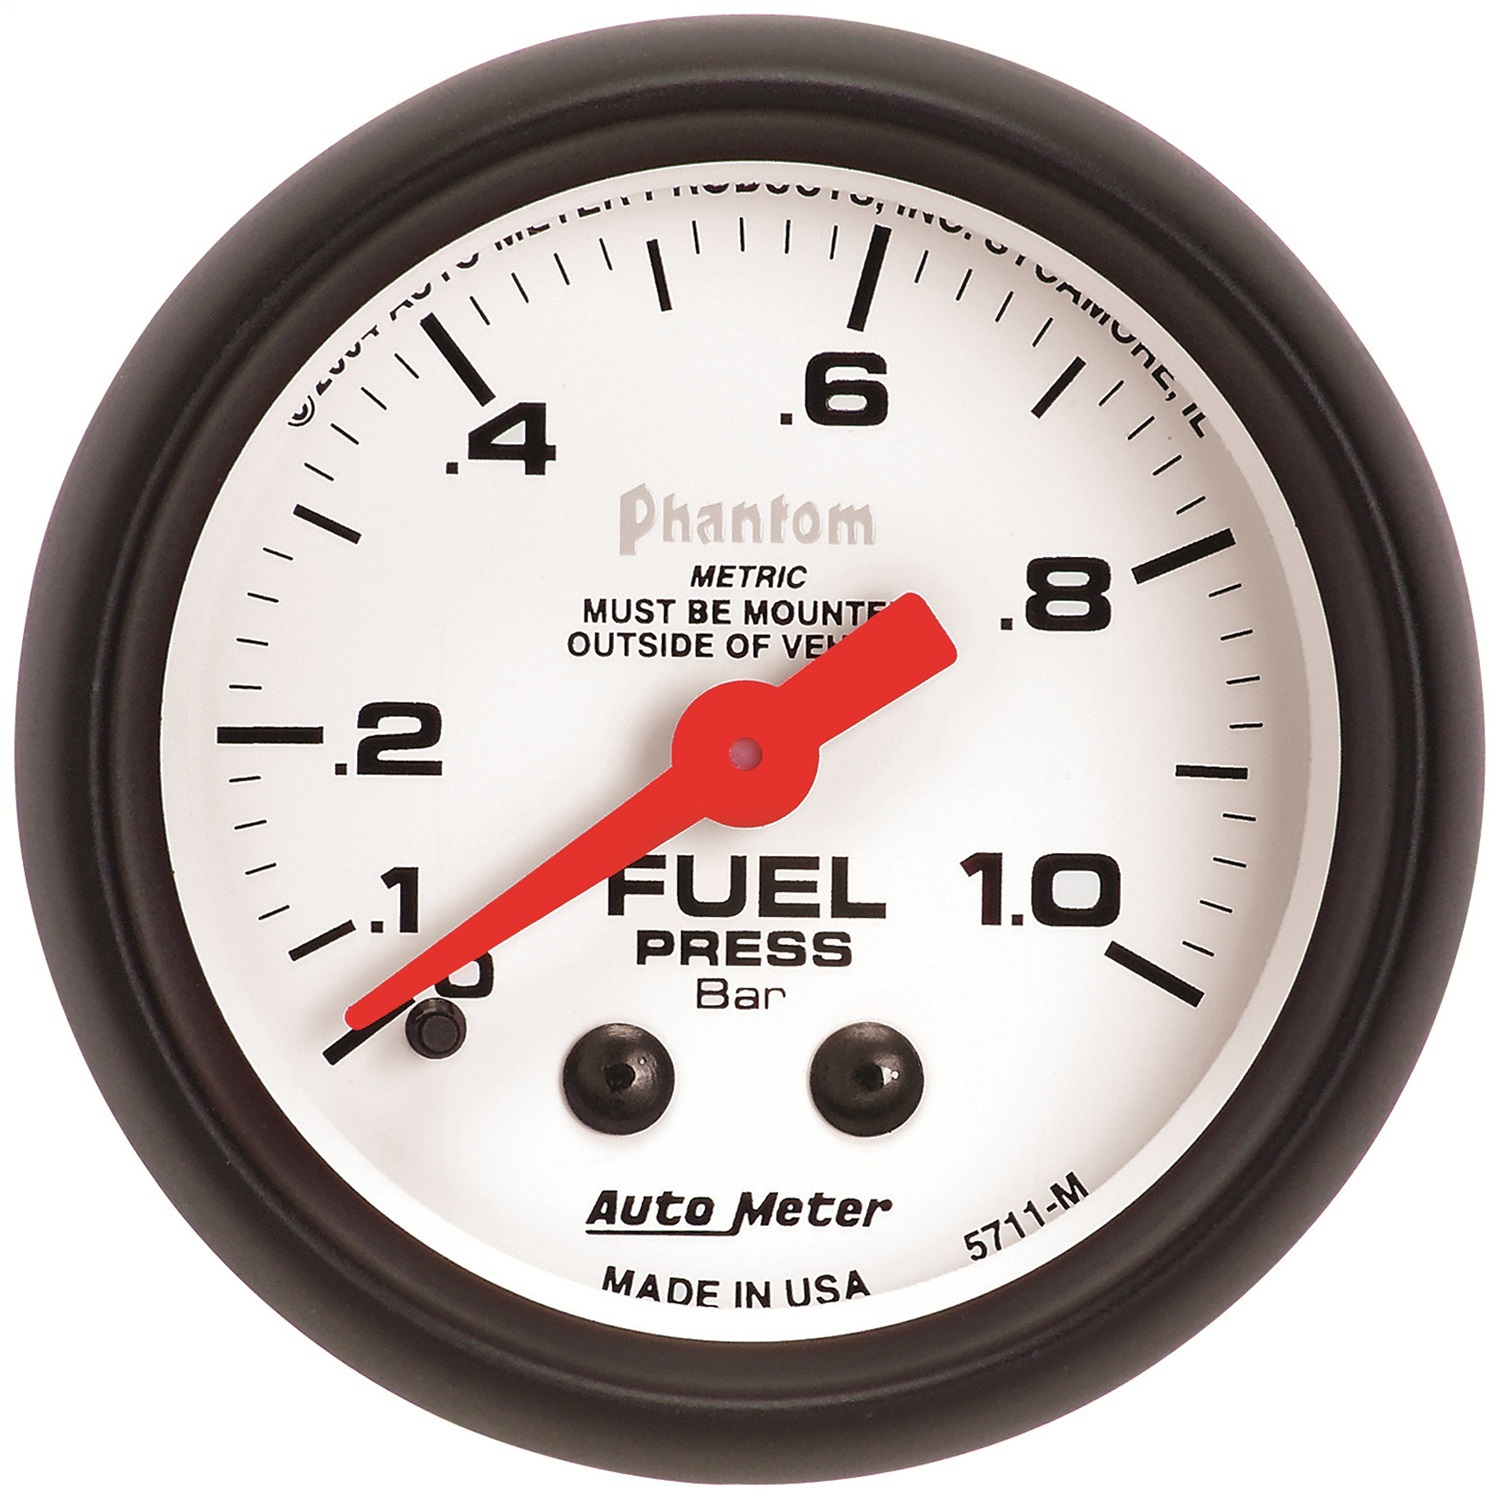 Auto Meter Auto Meter 5711-M Phantom; Mechanical Fuel Pressure Gauge